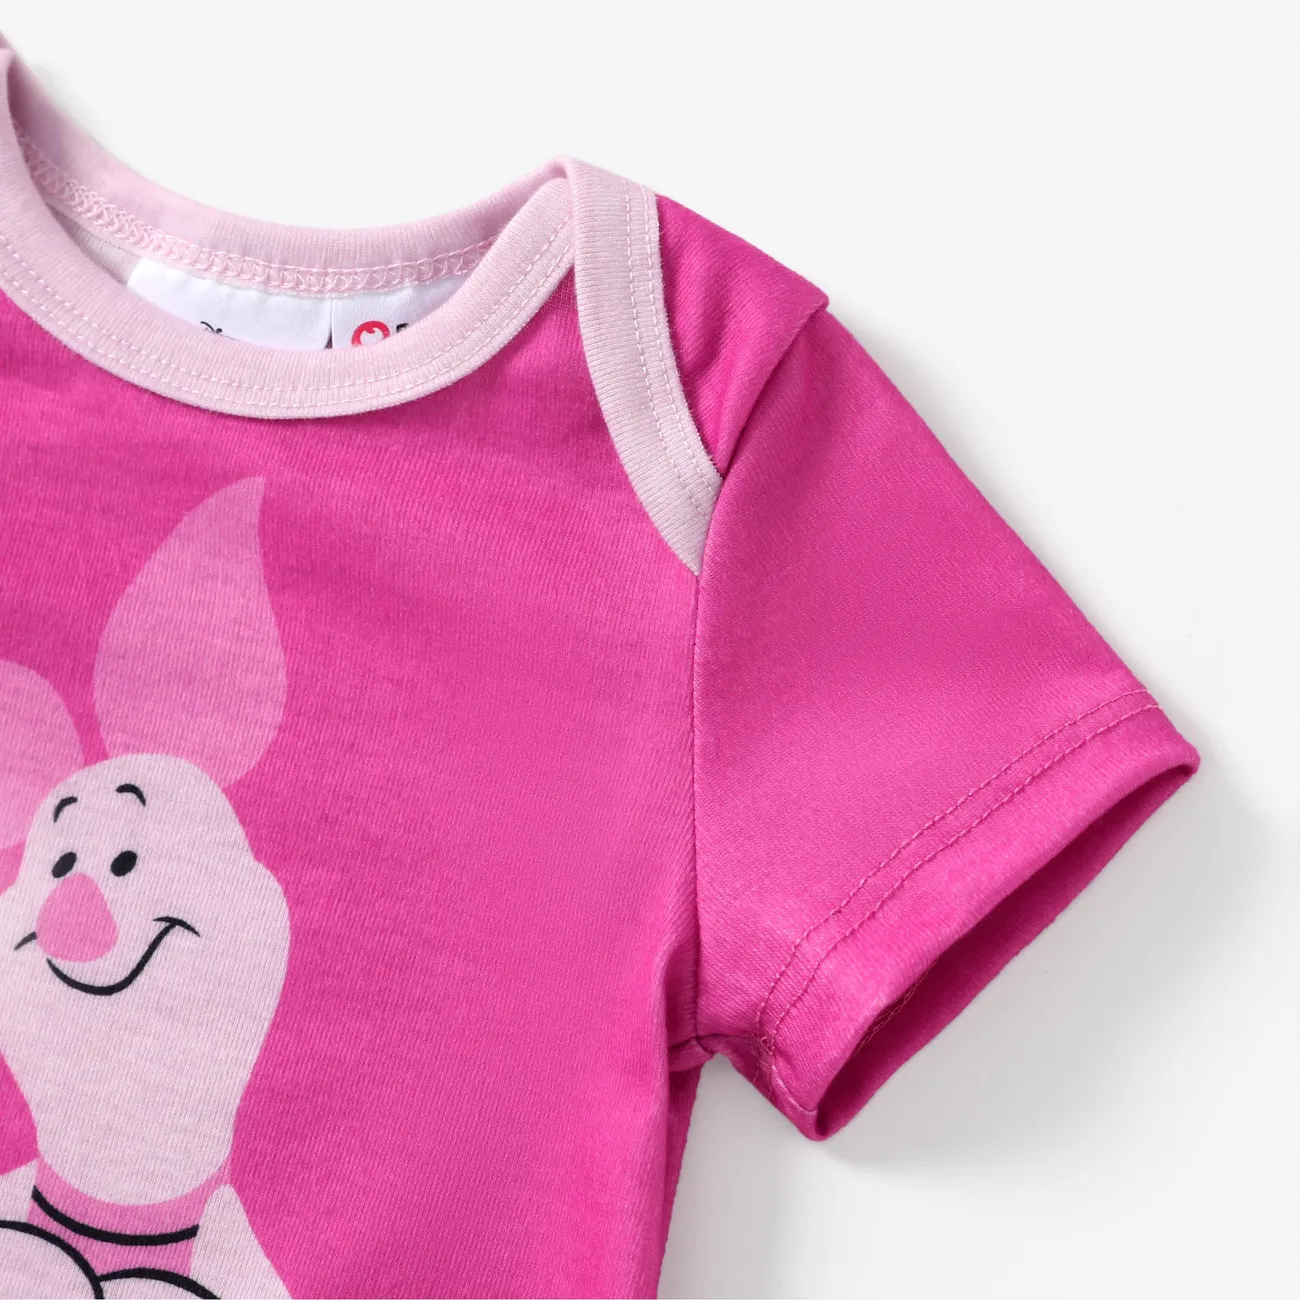 Disney Winnie the Pooh Baby Girls/Boys 1pc Naia™ Character Print Short-sleeve  Romper Pink big image 1